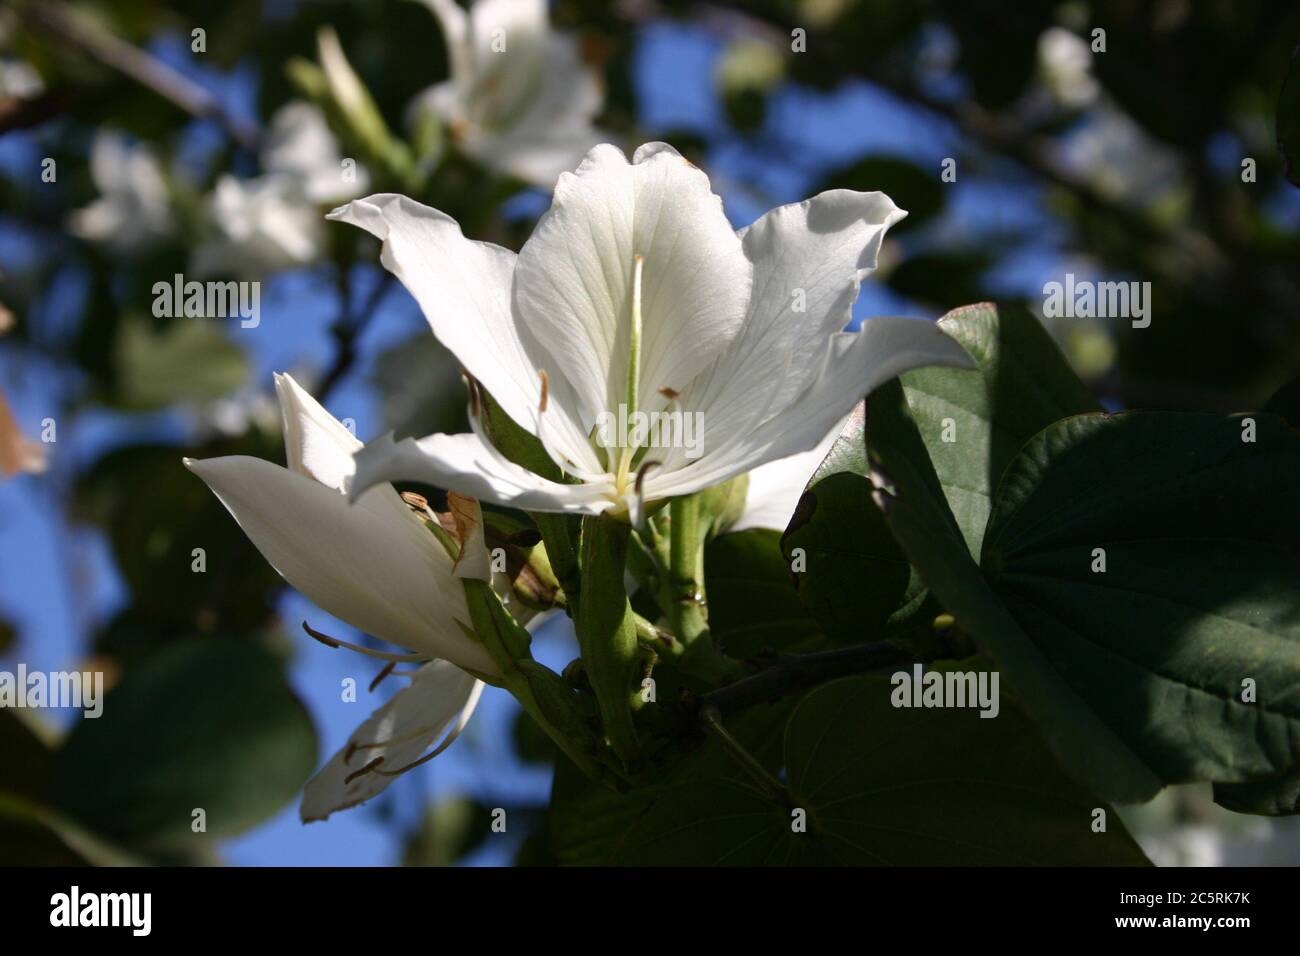 CLOSE-UP OF THE FLOWERS OF THE BEAUTIFUL BAUHINIA TREE, AUSTRALIA. Stock Photo